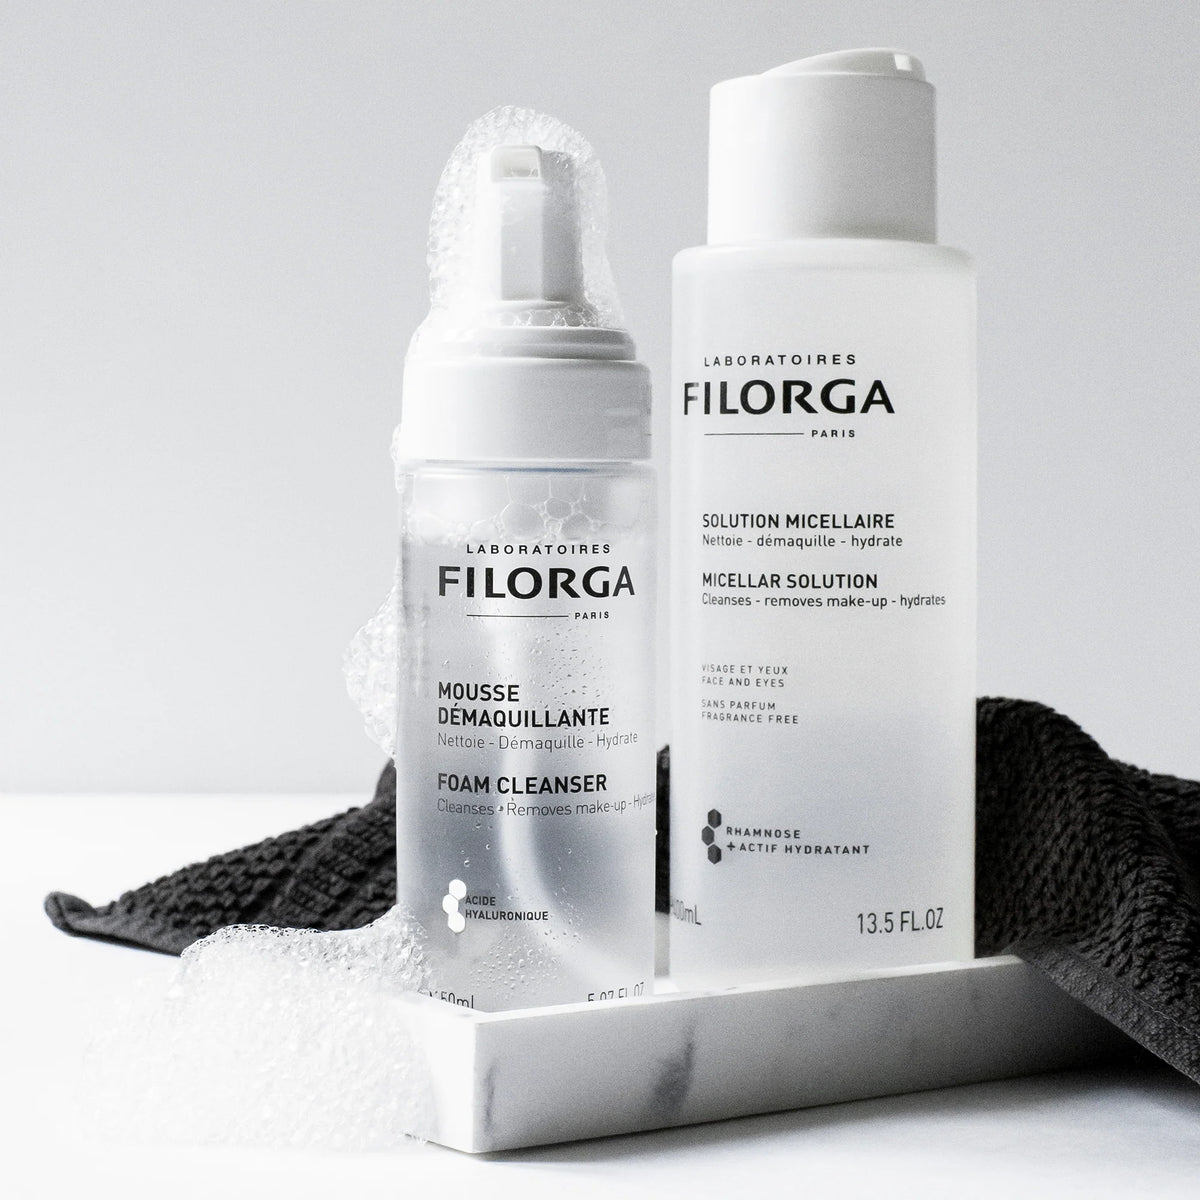 Filorga Mousse Demagillare - 150ml make -up cleansing foam